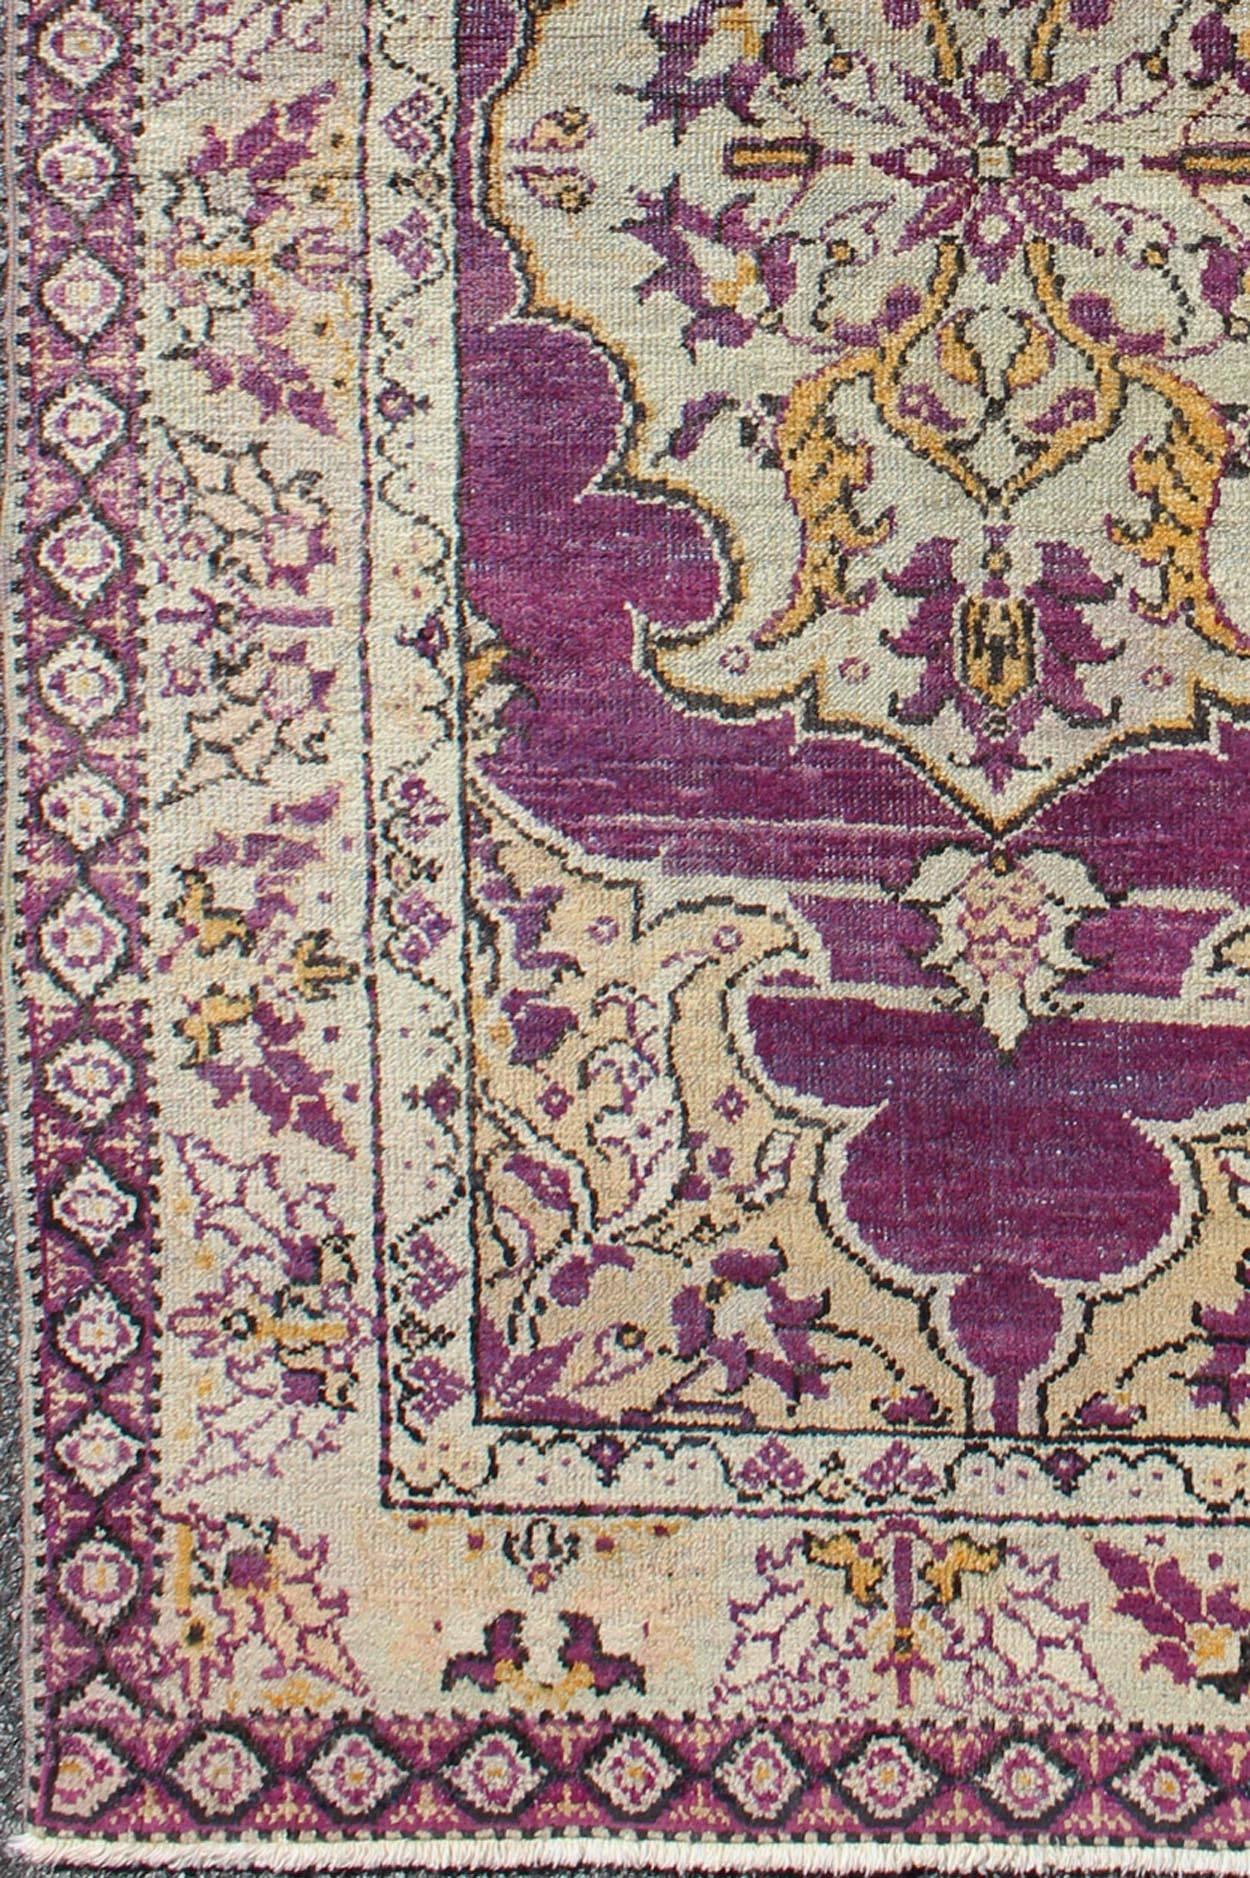 Purple Background Vintage Turkish Oushak Rug with Floral Medallion Design. Keivan Woven Arts rug#EN-141041, country of origin / type: Turkey / Oushak, circa 1940

Measures: 3'7 x 6'

This sublime and enchanting vintage rug, a gorgeous Oushak rug